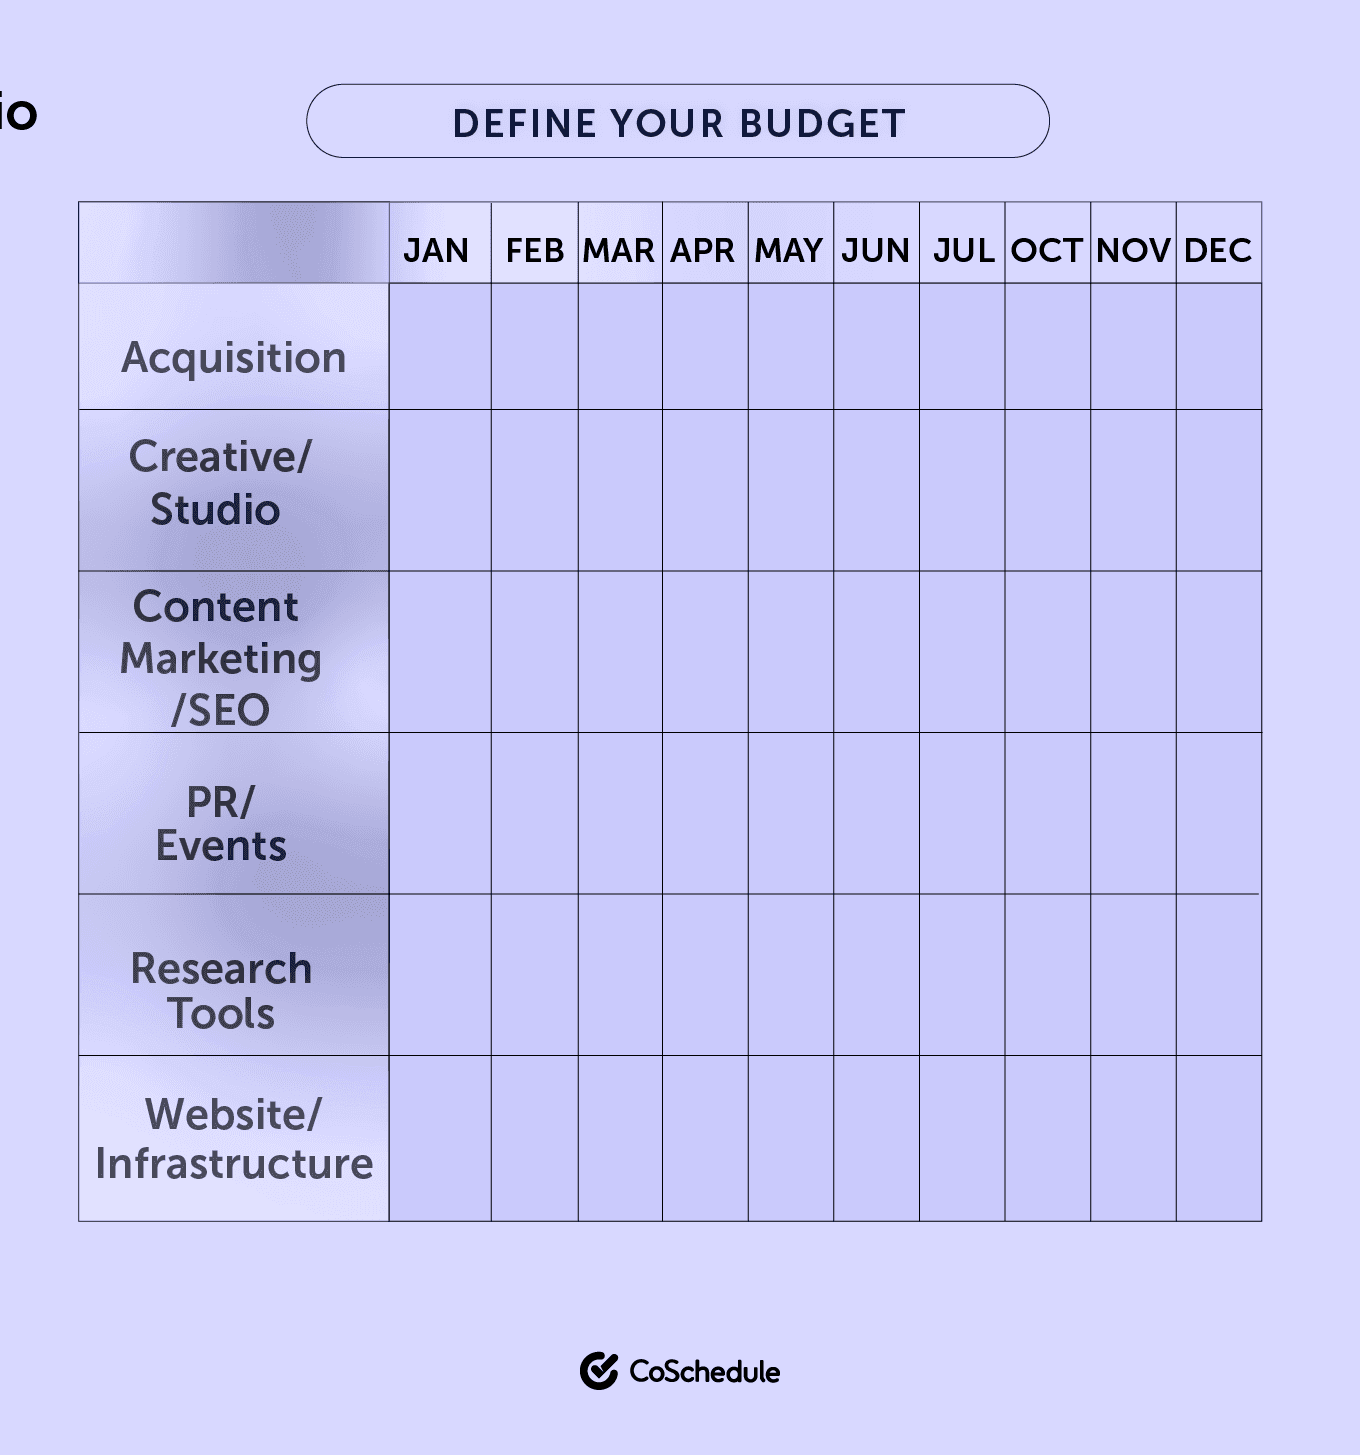 CoSchedule define your budget graphic